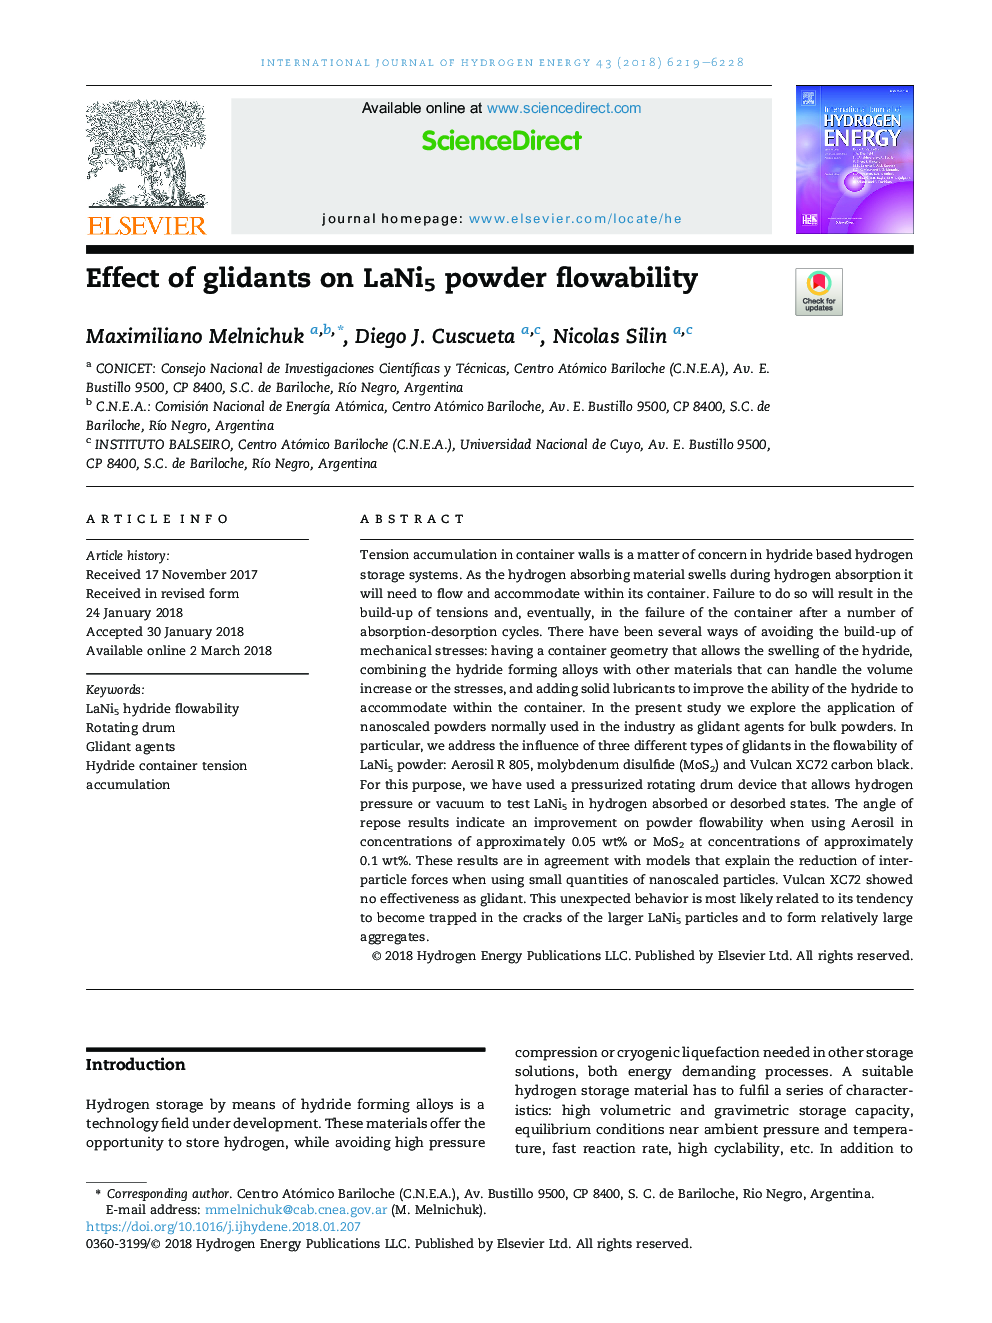 Effect of glidants on LaNi5 powder flowability